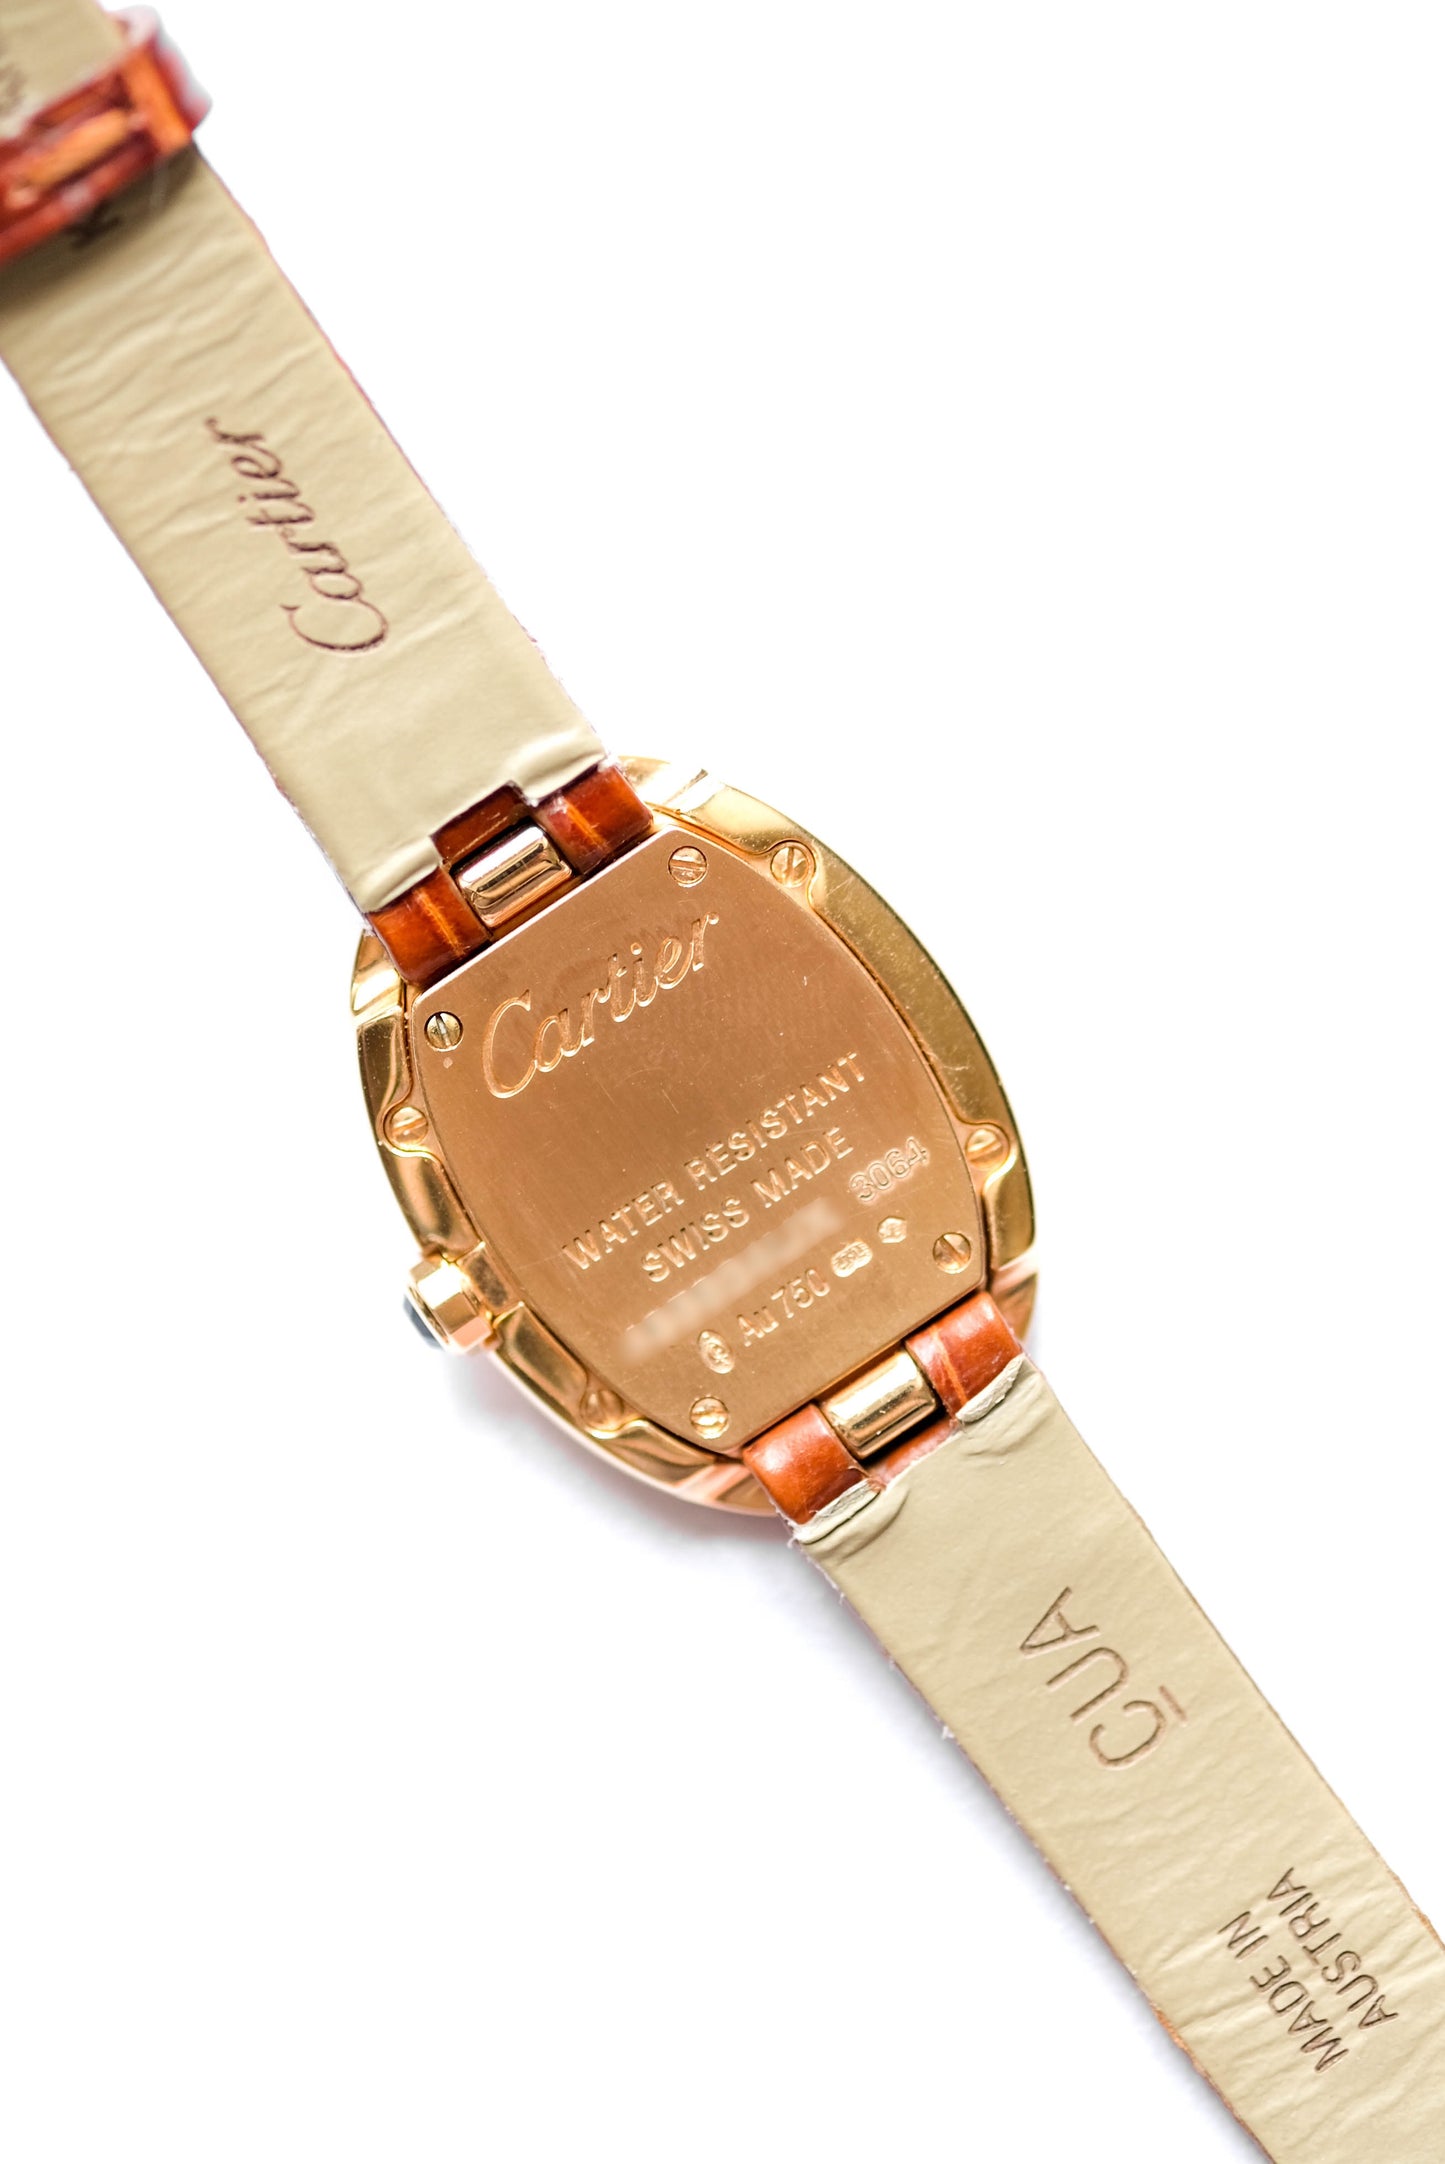 Cartier Baignoire - rose gold - full set